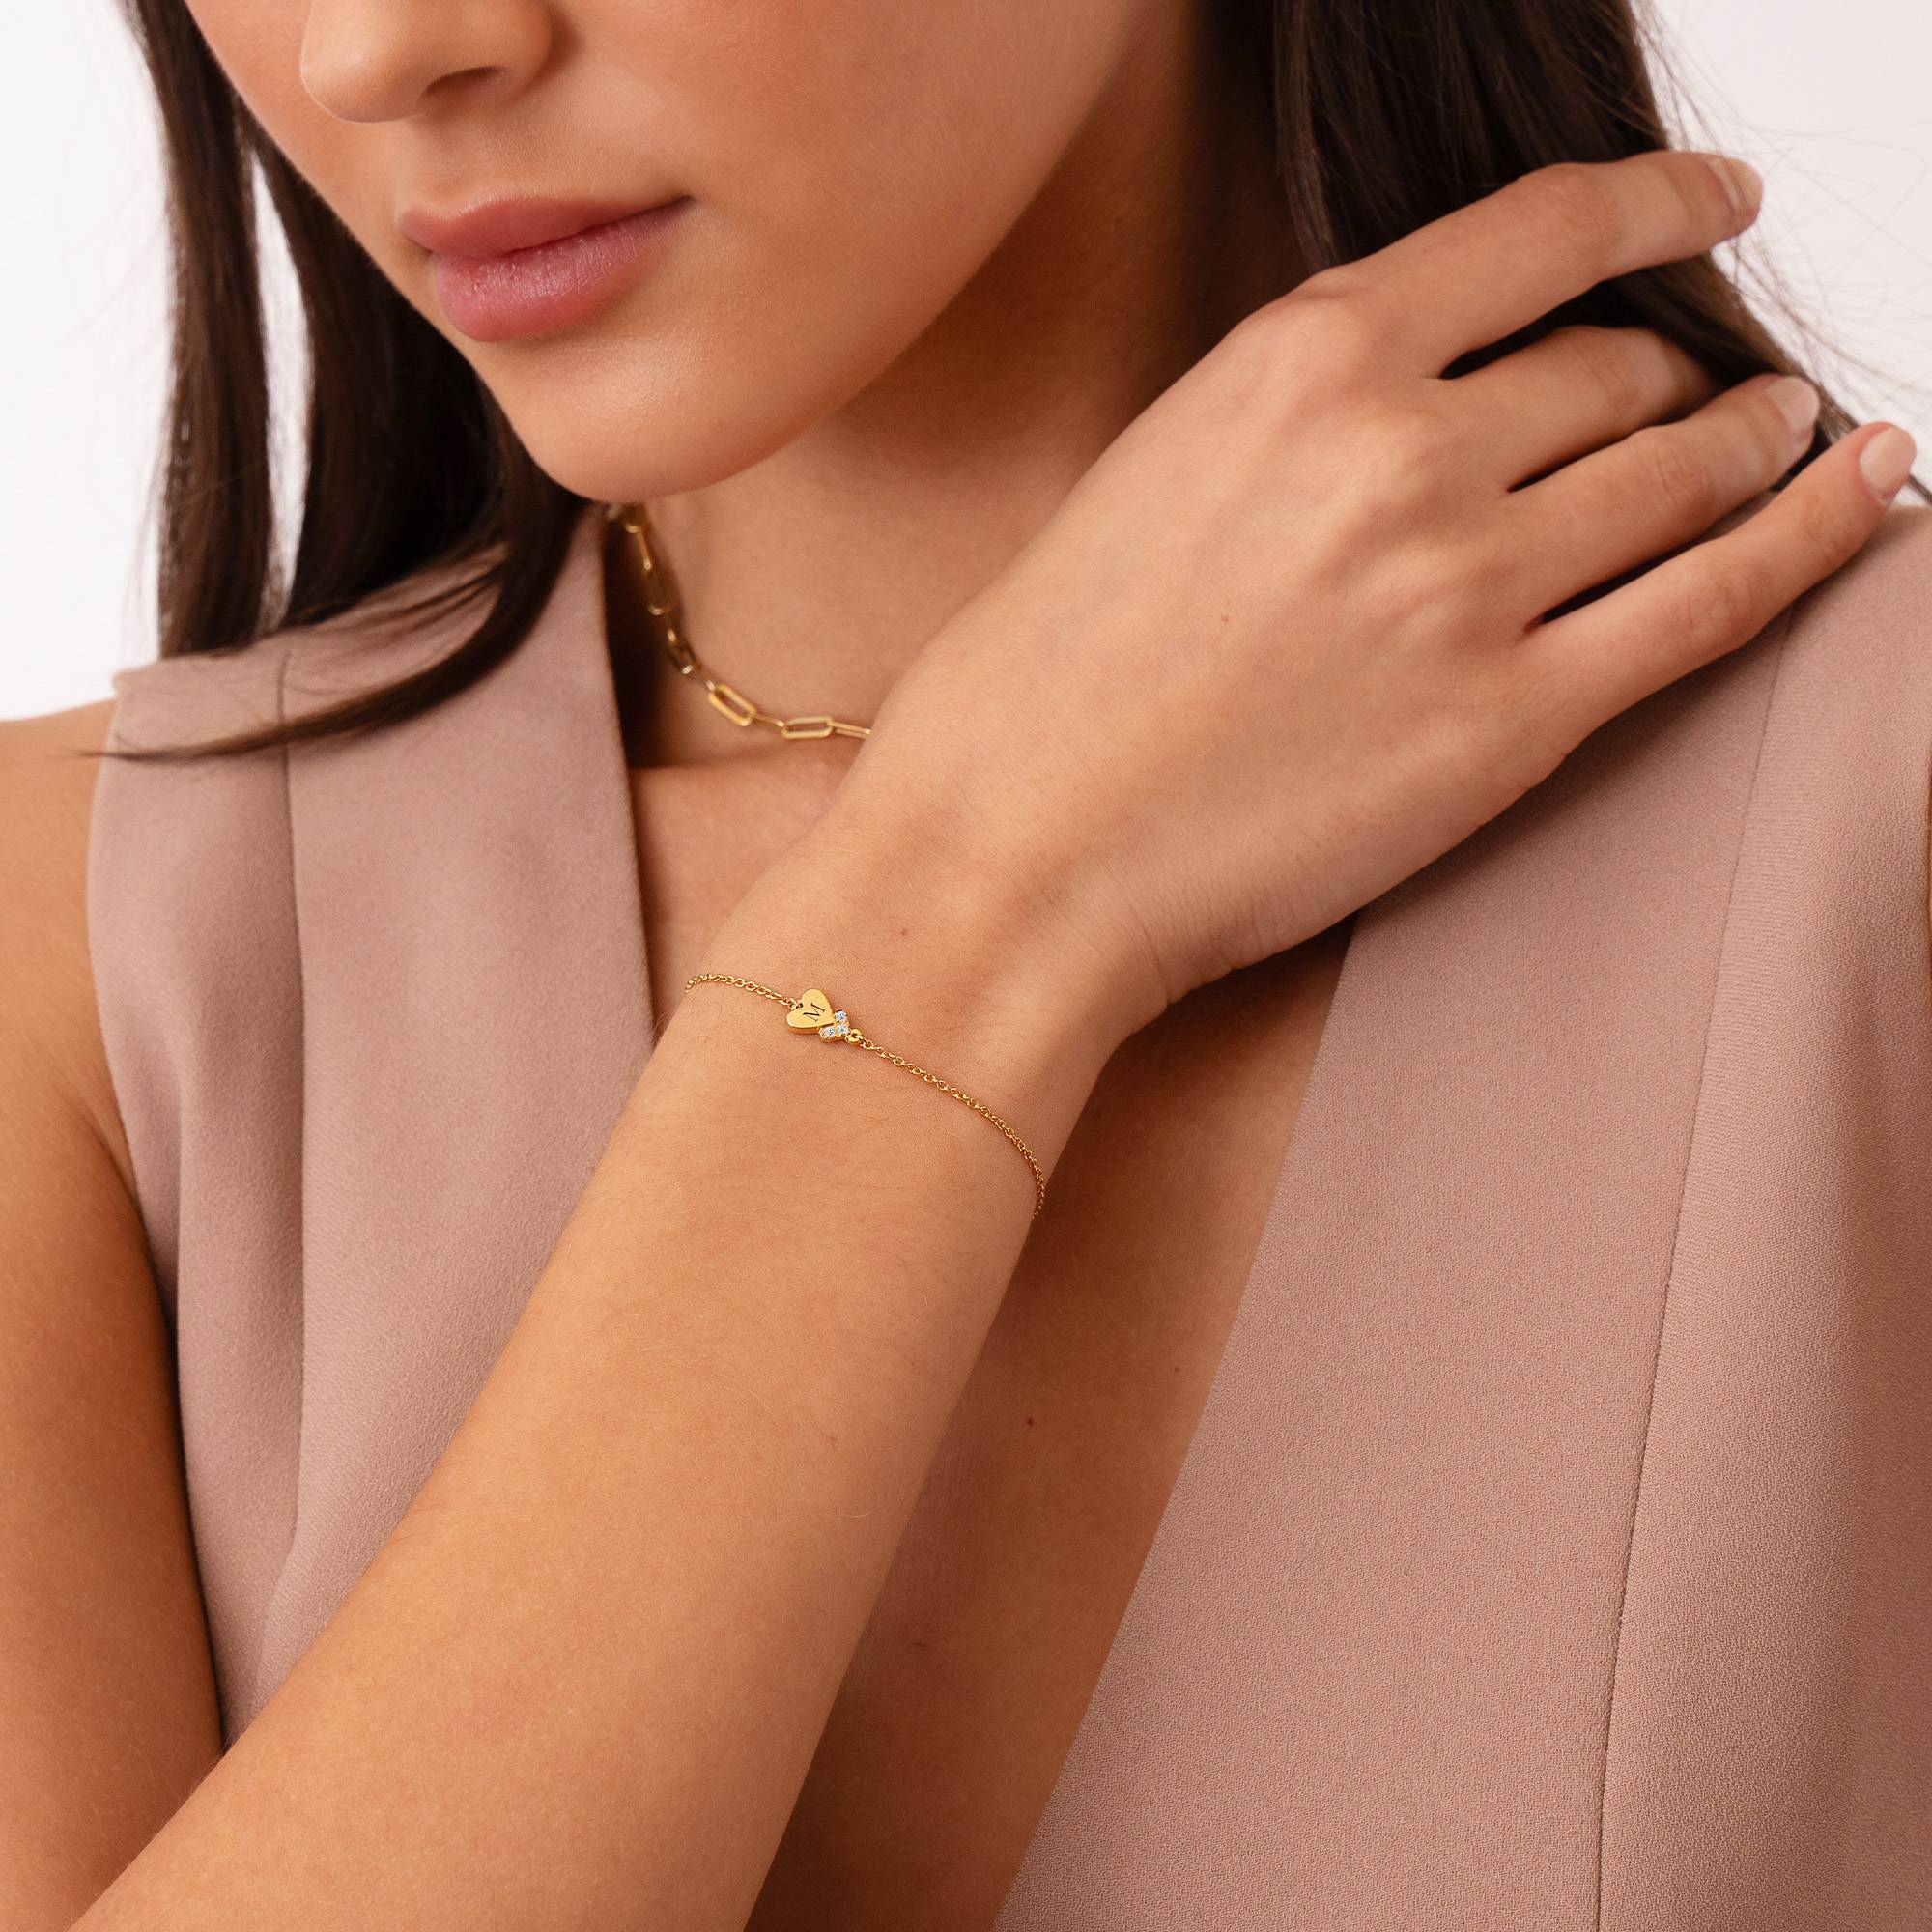 Dakota Heart Initial Bracelet with Diamonds in 18ct Gold Vermeil-5 product photo